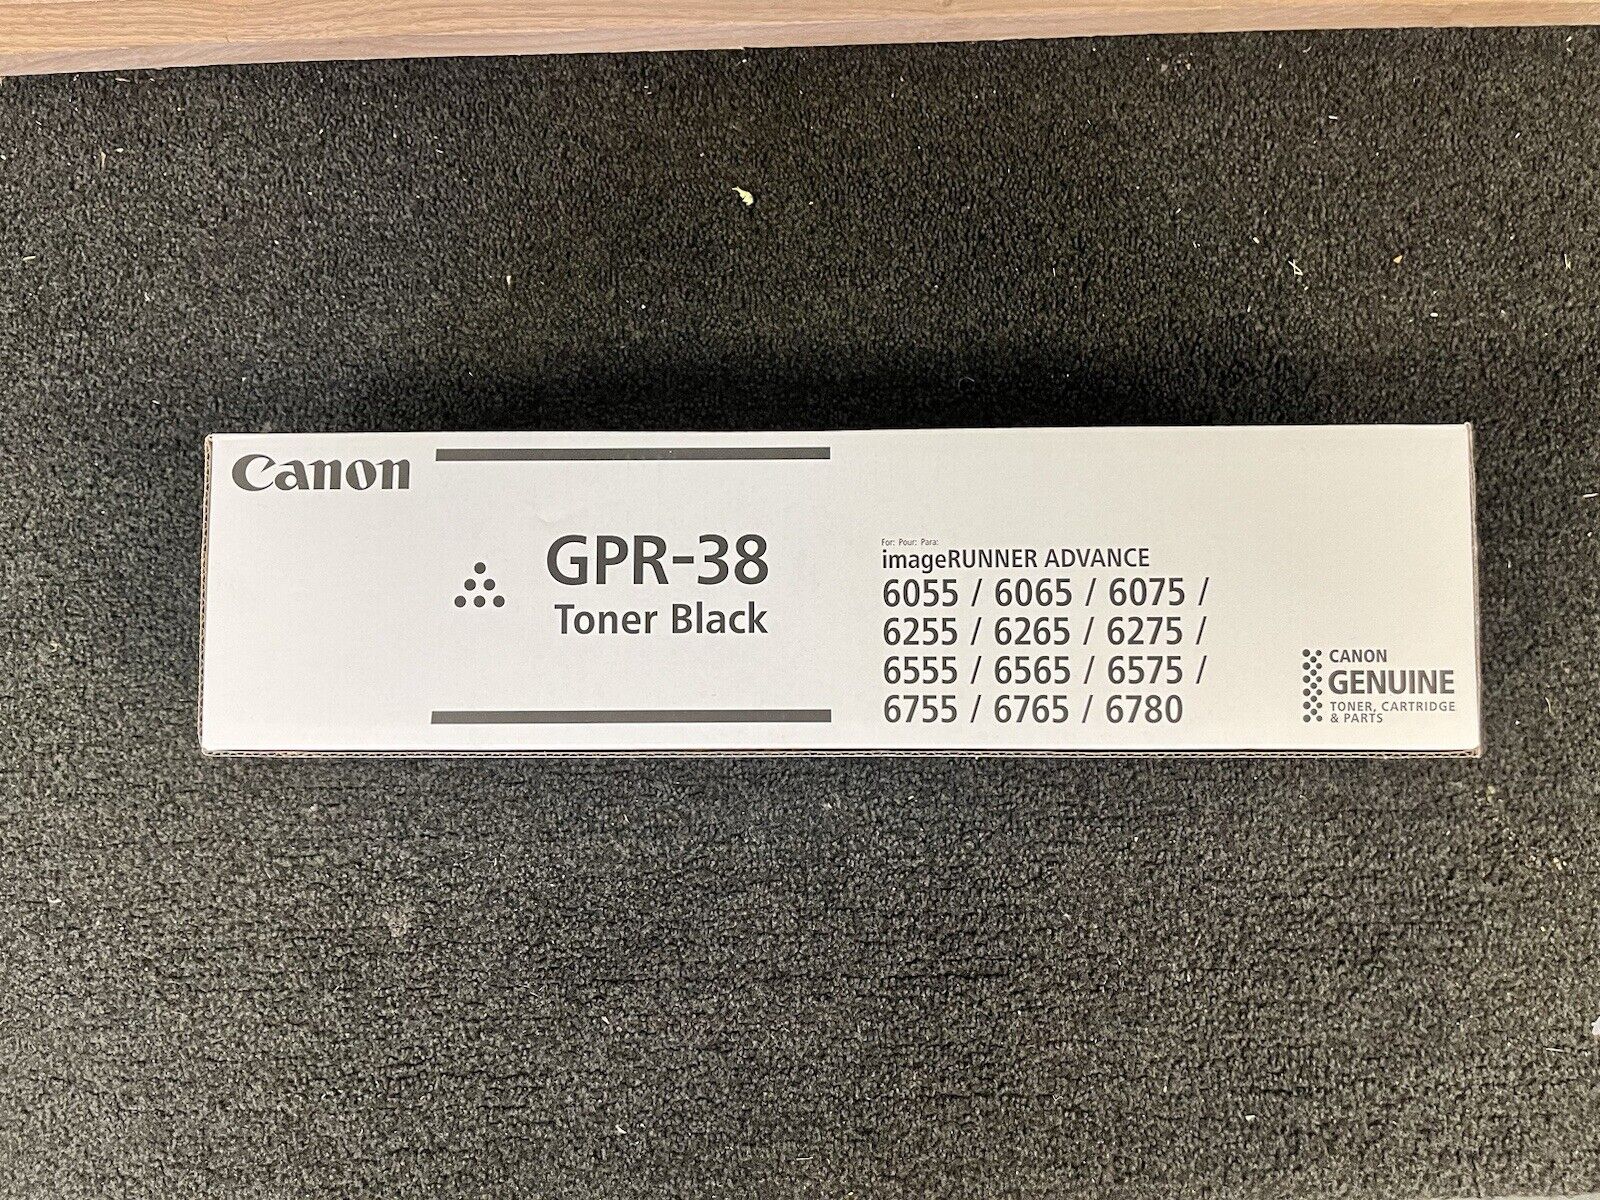 Genuine Canon GPR-38 Toner Black (new)